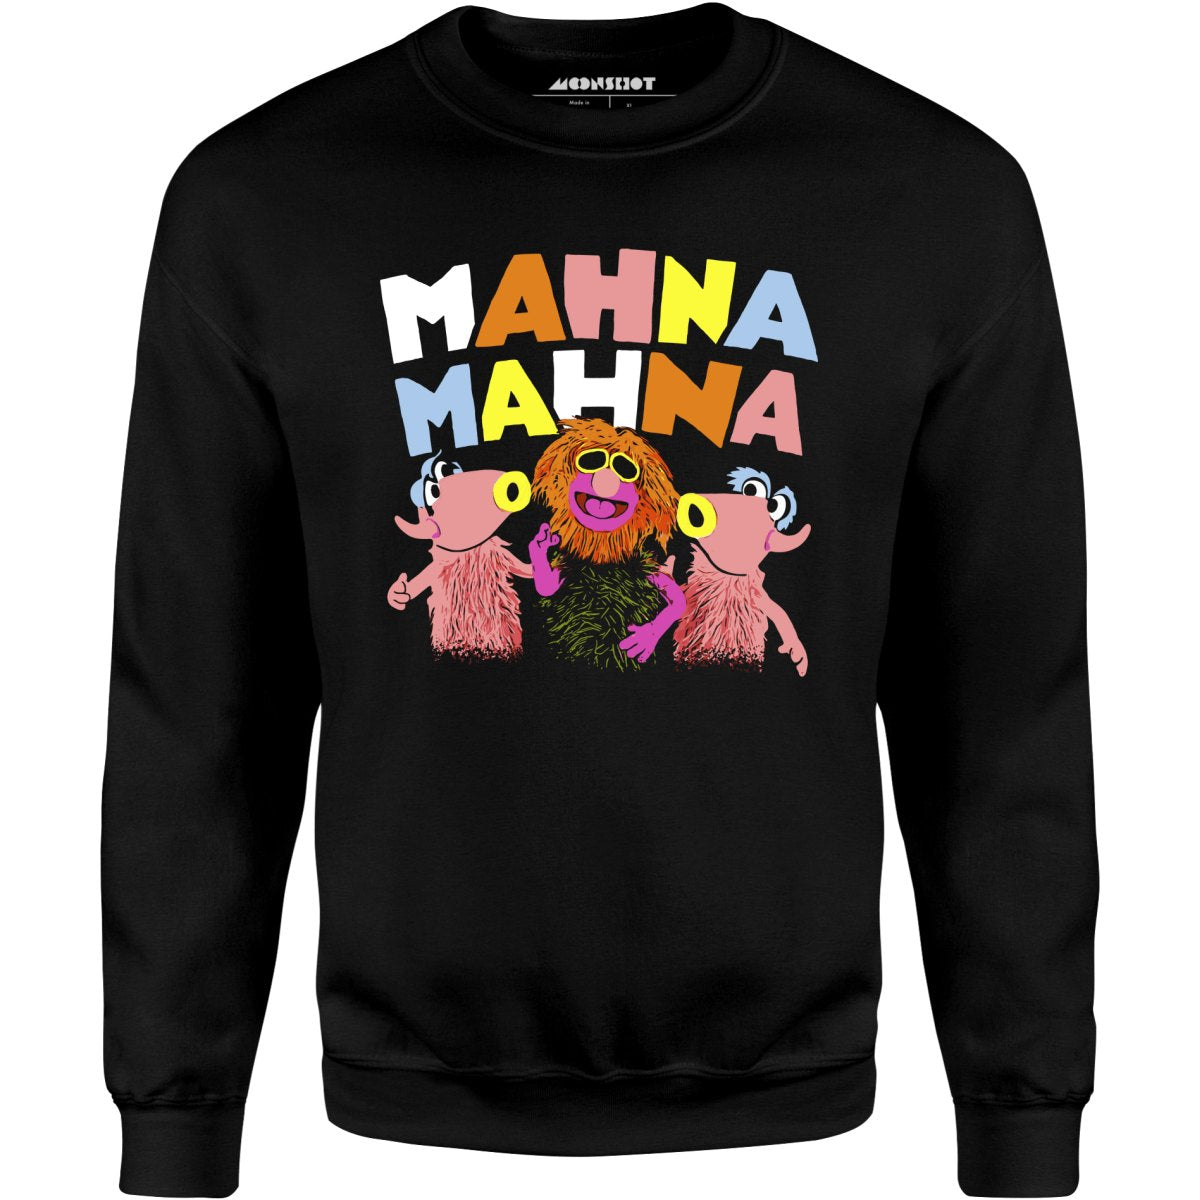 Mahna Mahna - Unisex Sweatshirt